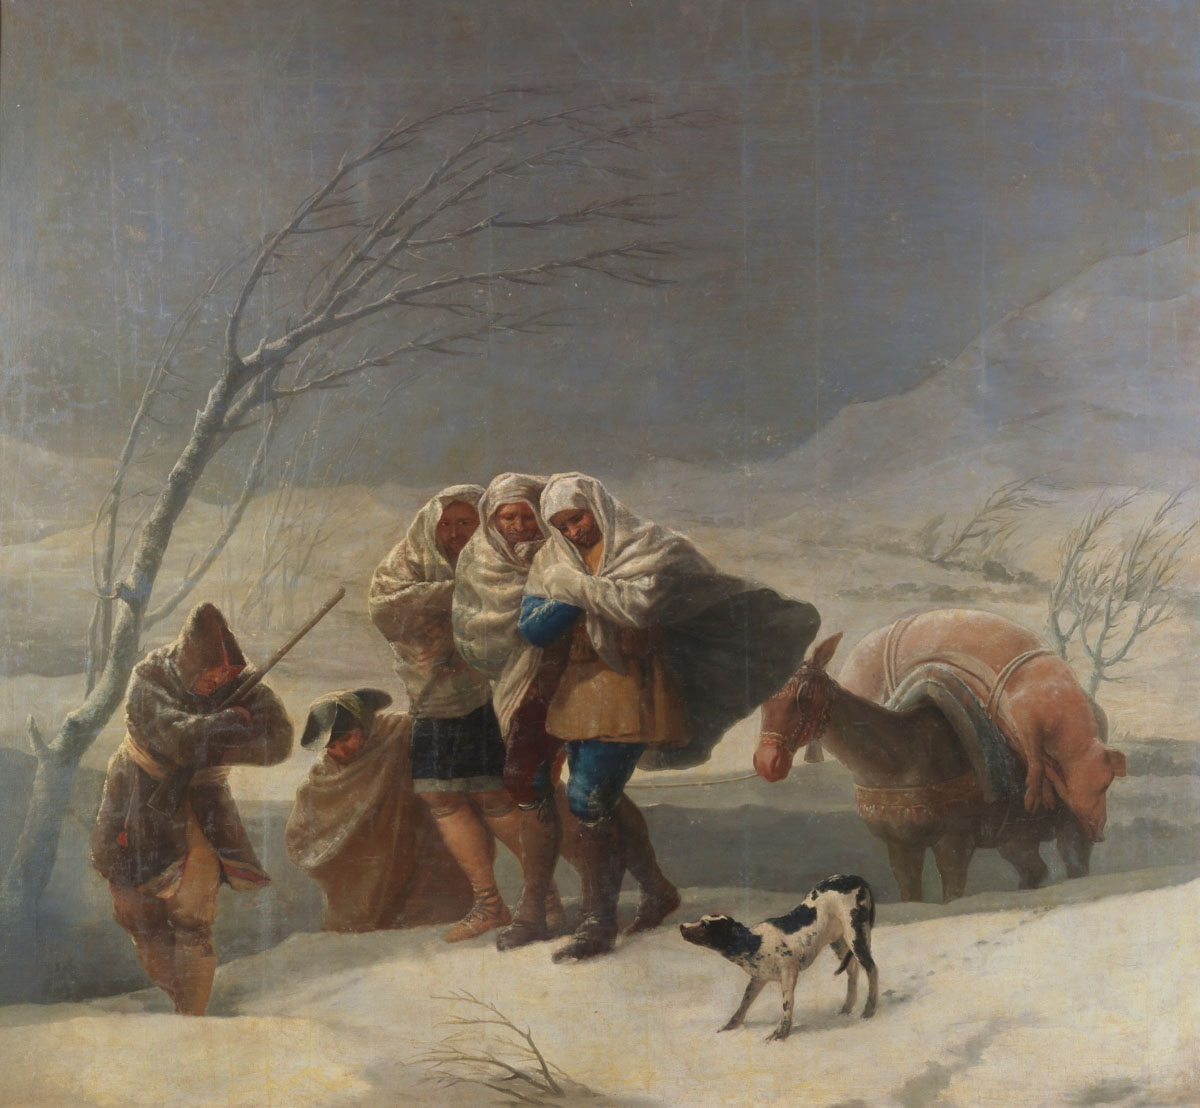 Figure 4. Goya, A nevada.